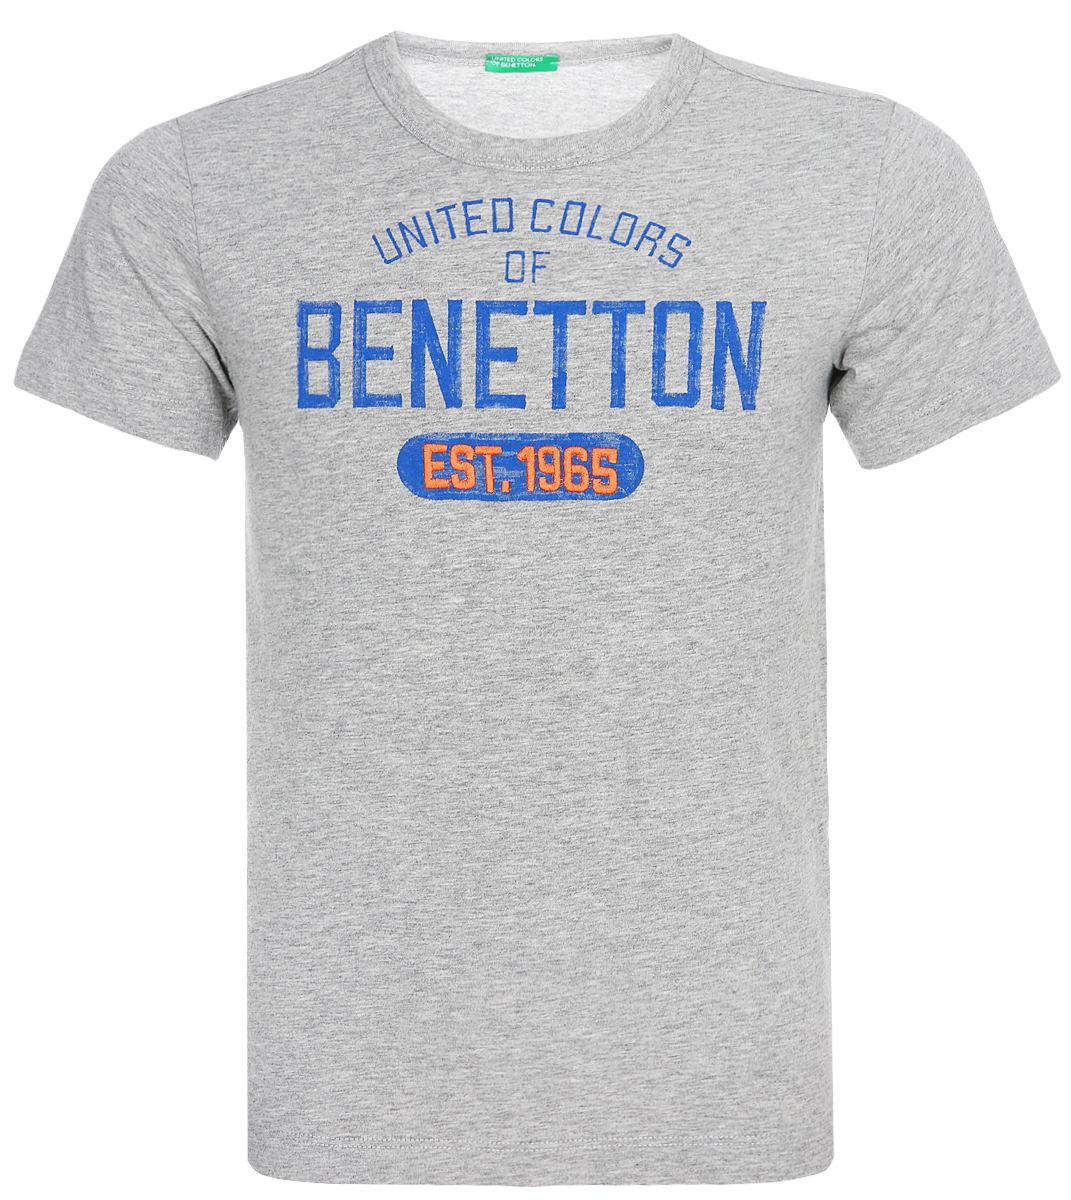 Футболка для мальчика United Colors of Benetton, цвет: серый. 3I1XC13NW_501. Размер 170